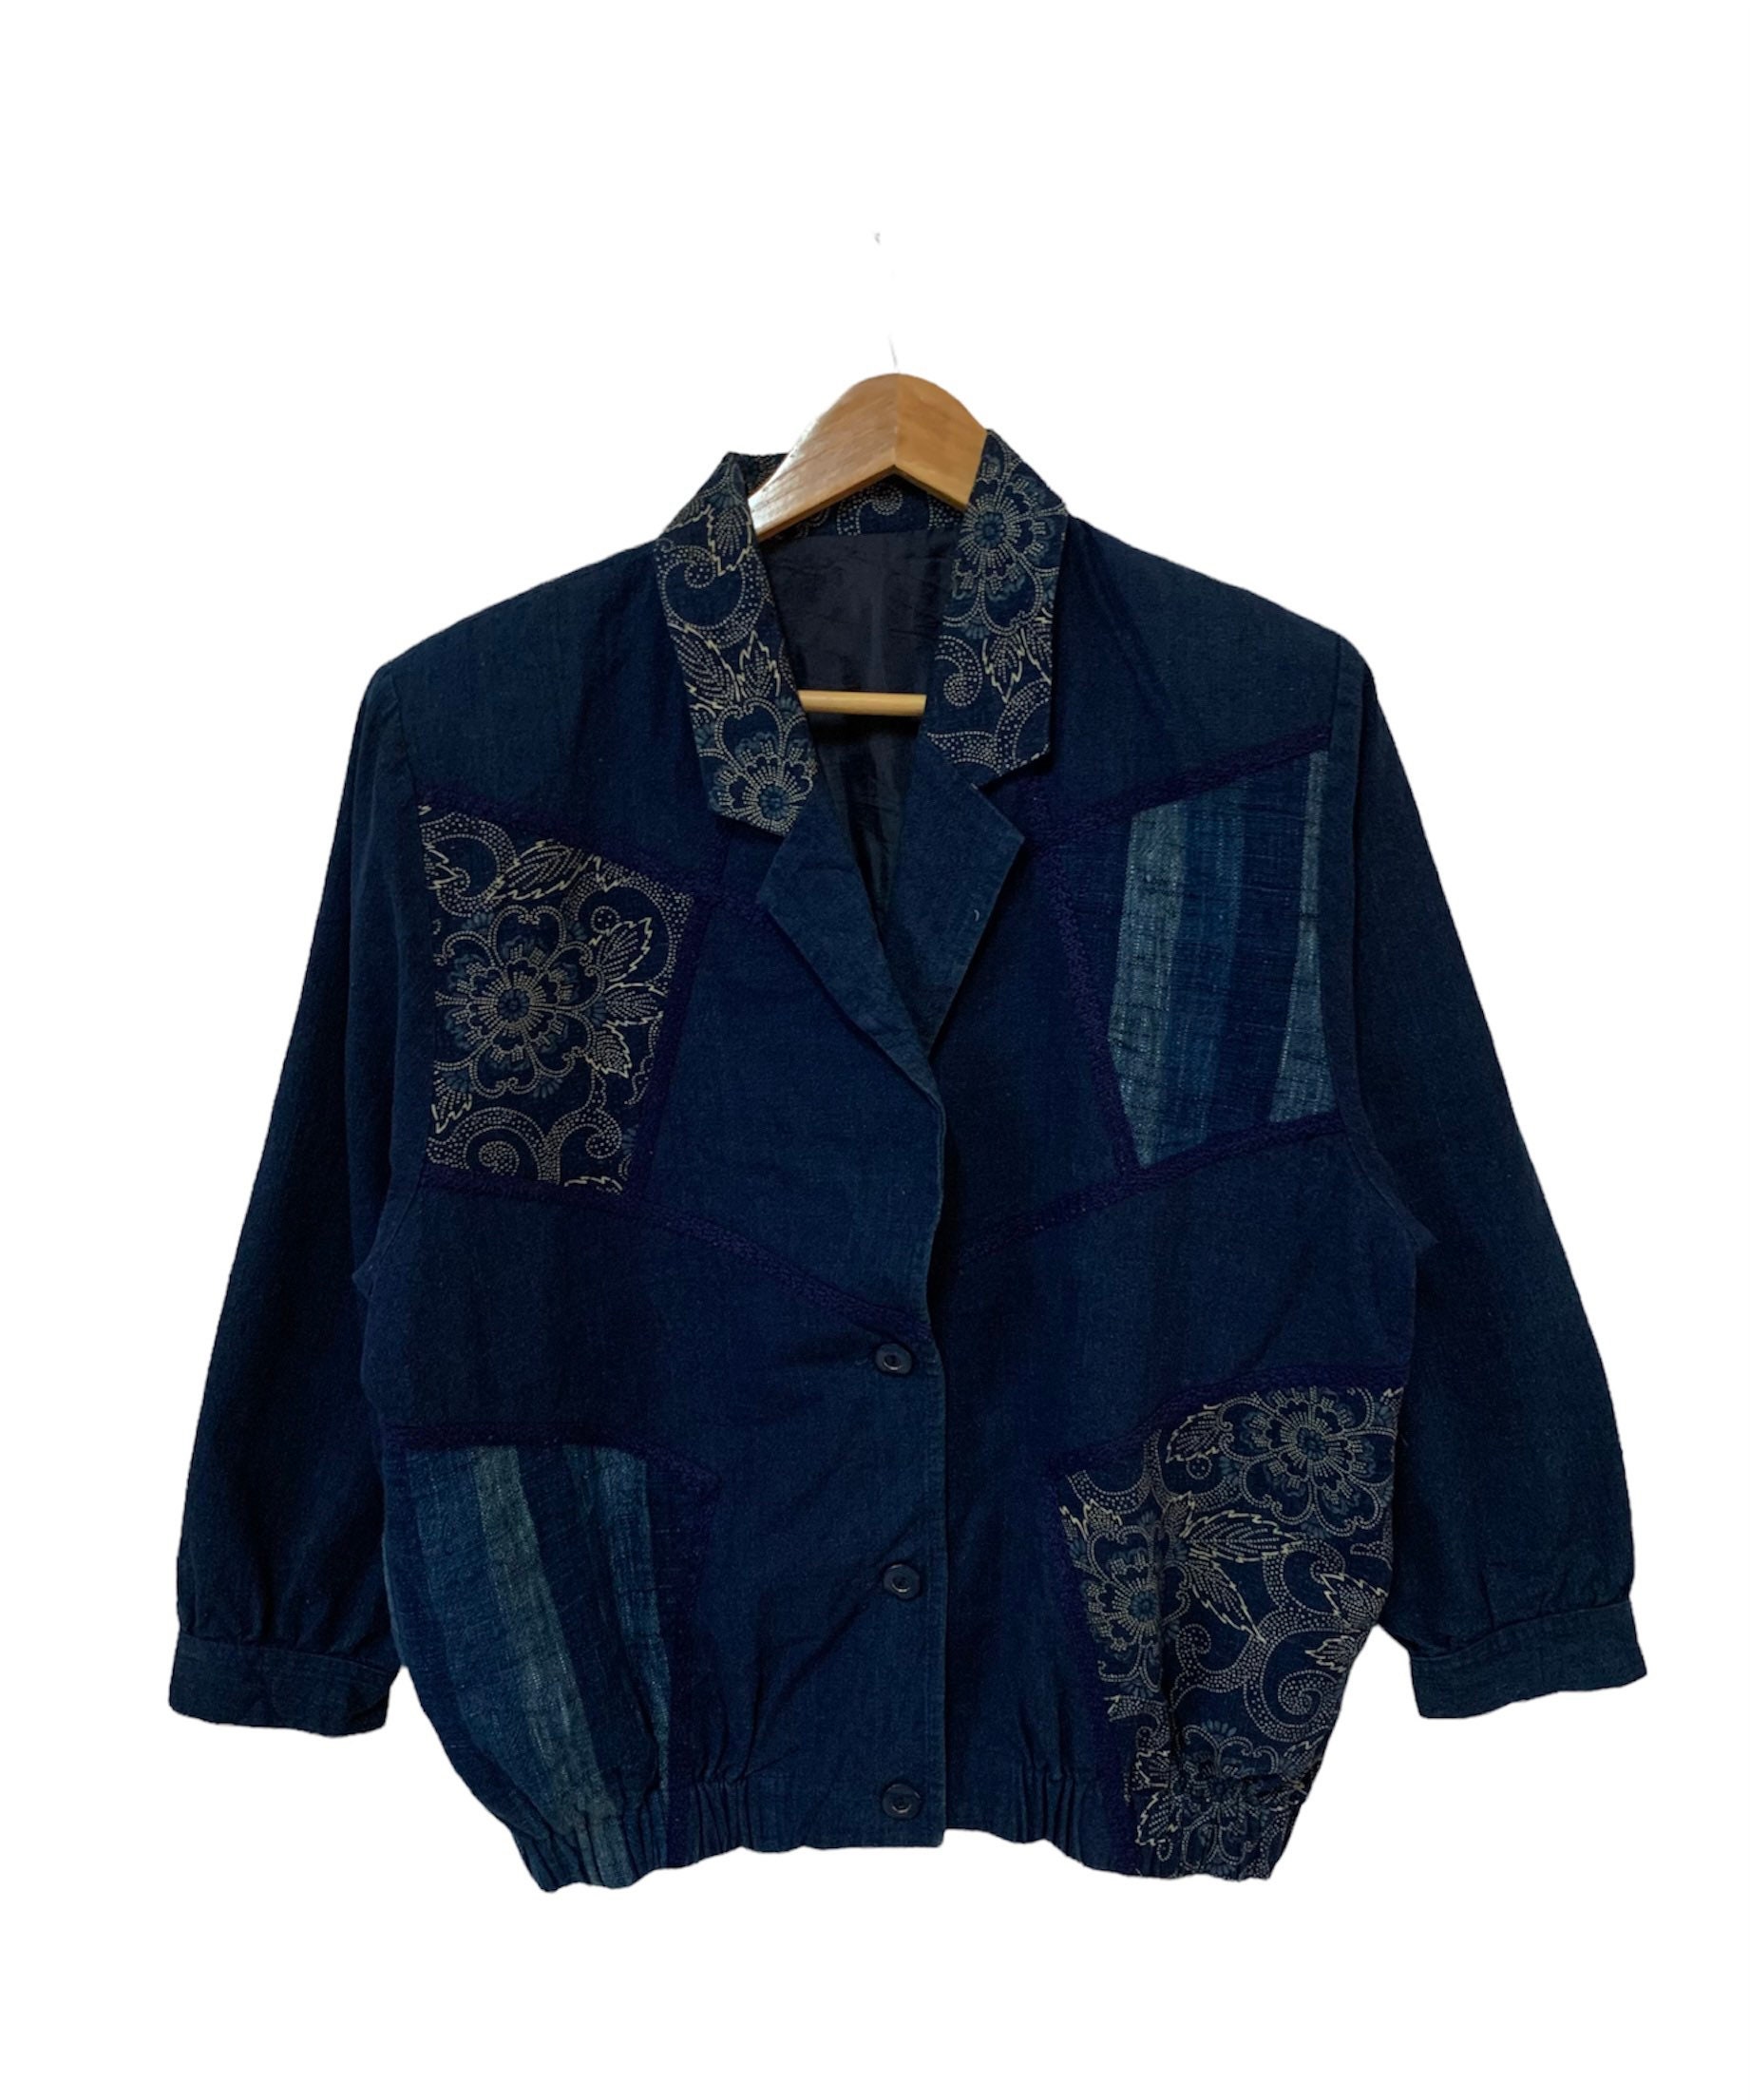 Vintage Indigo Japanese Brand Jacket Blazer Japan Fashion - Etsy